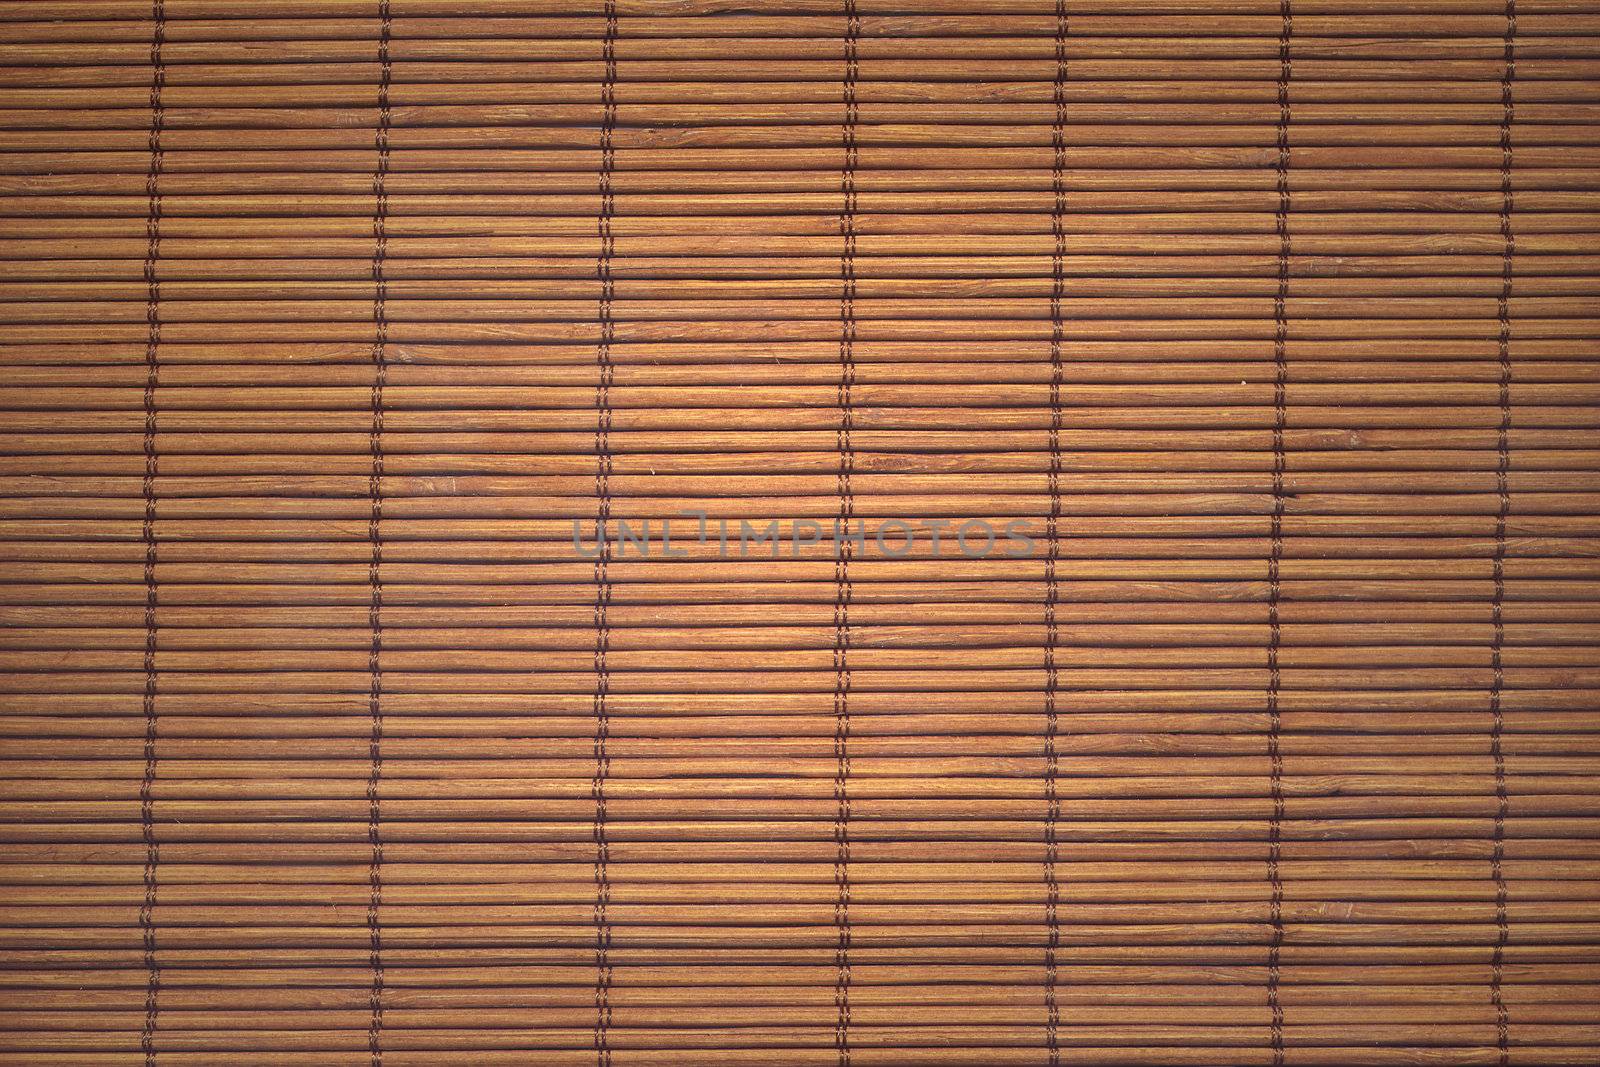 The asian mat from yellow bamboo by petrkurgan